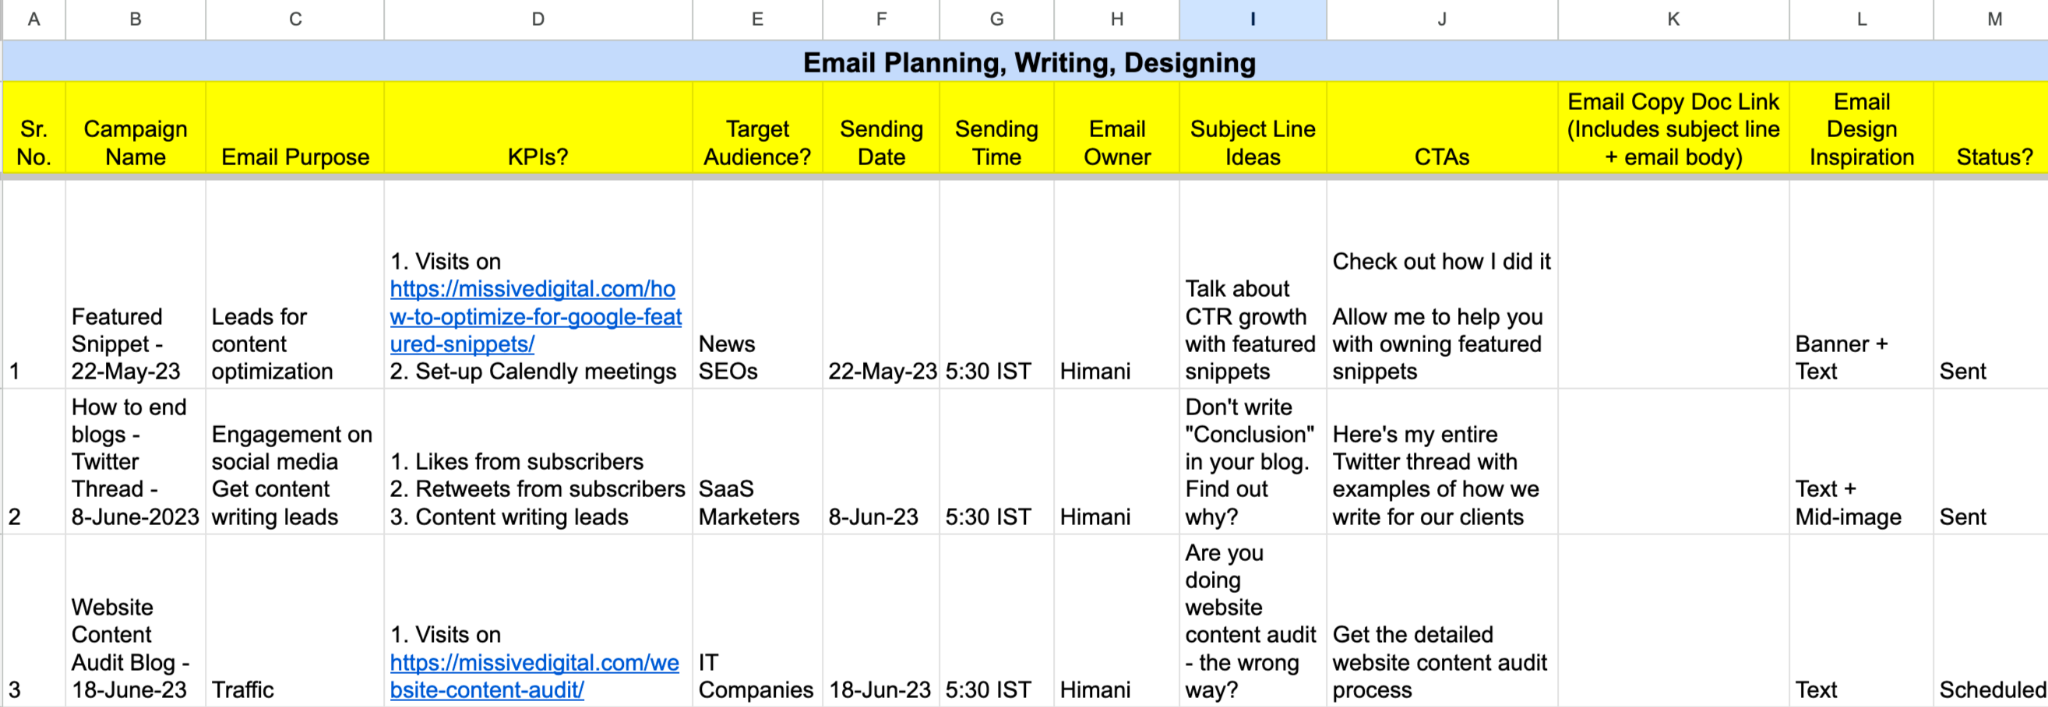 Email marketing calendar by Missive Digital